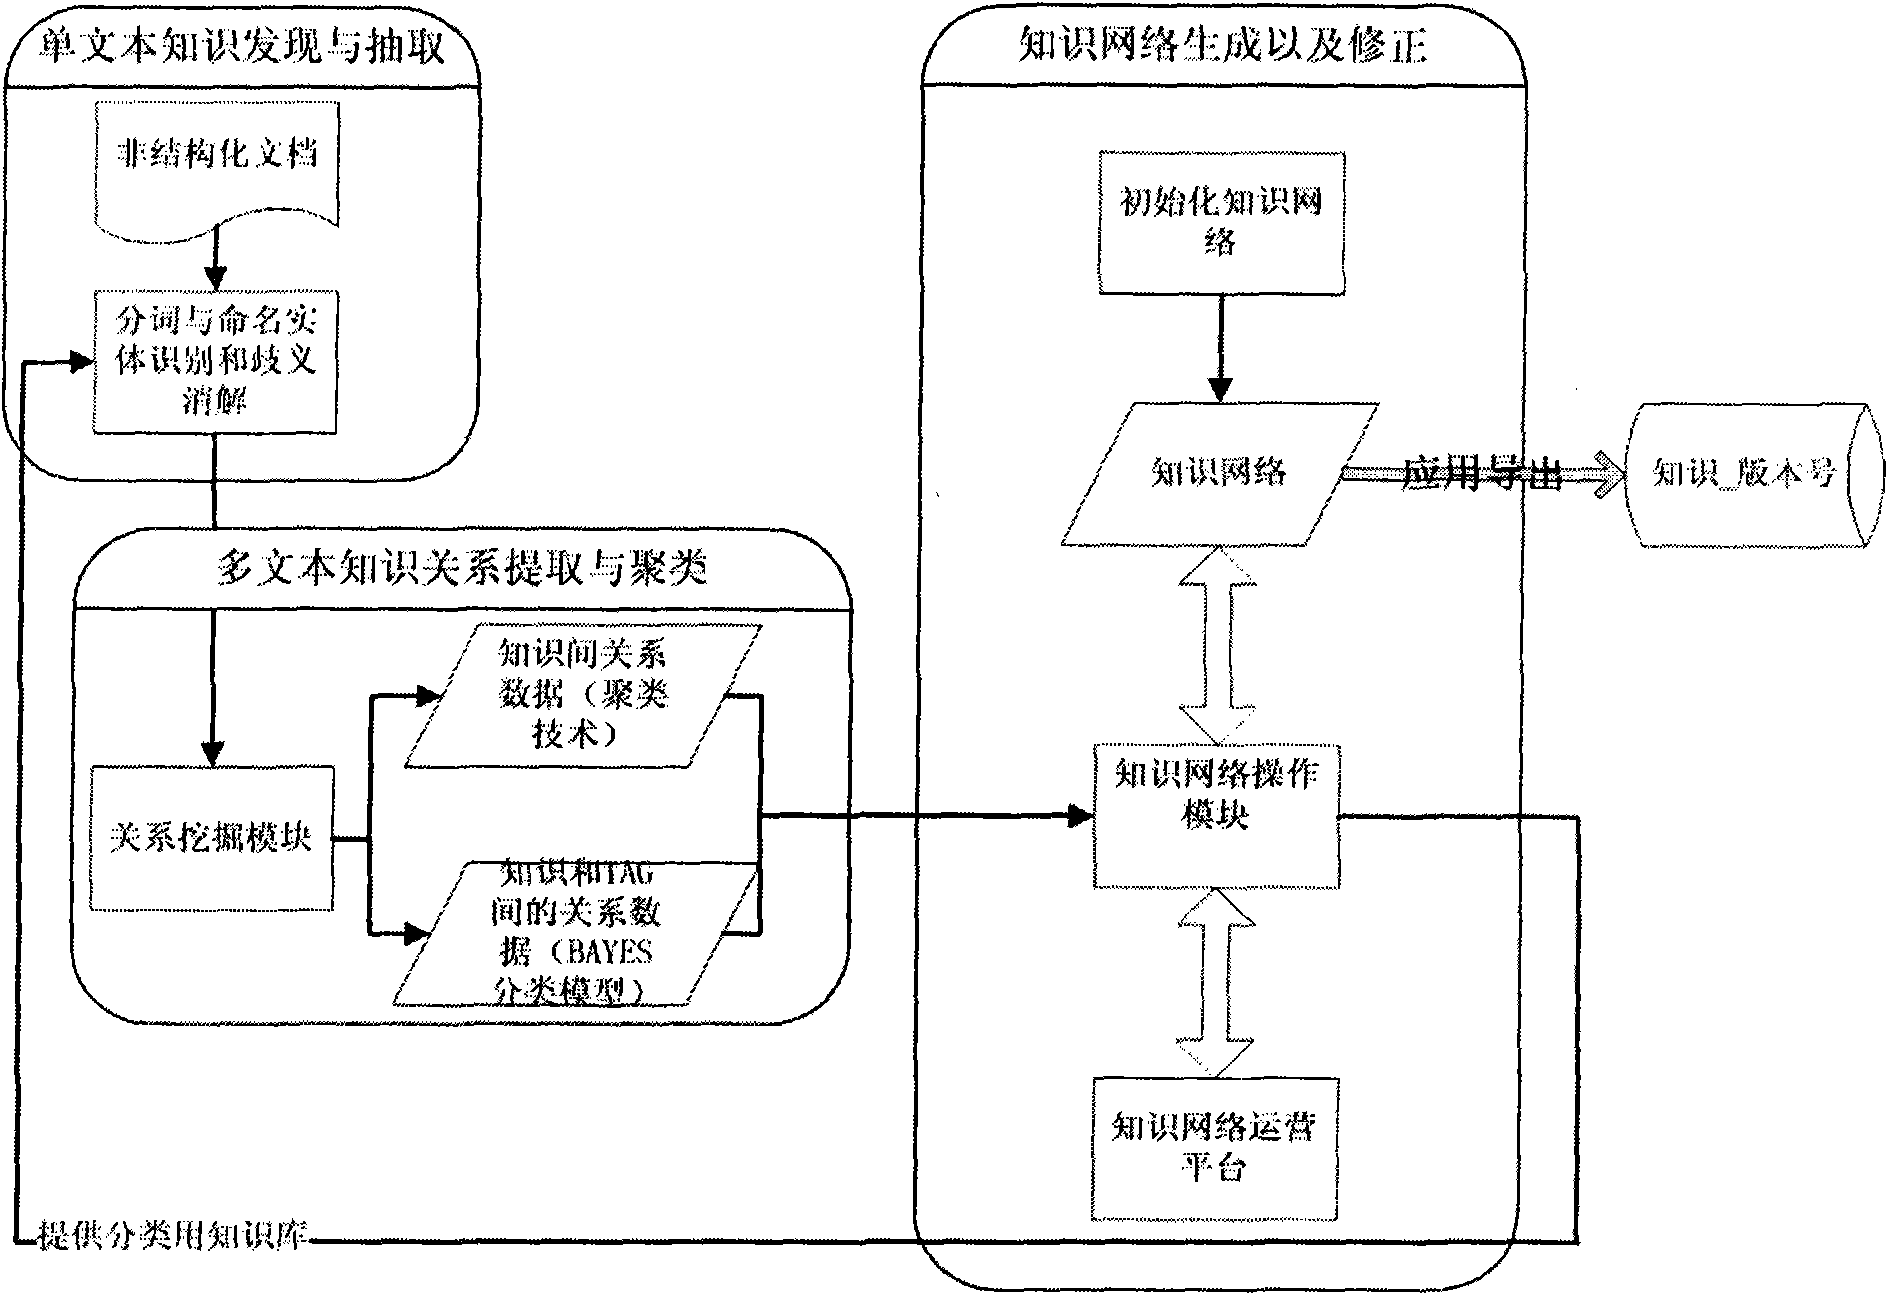 Knowledge network semi-automatic generation method